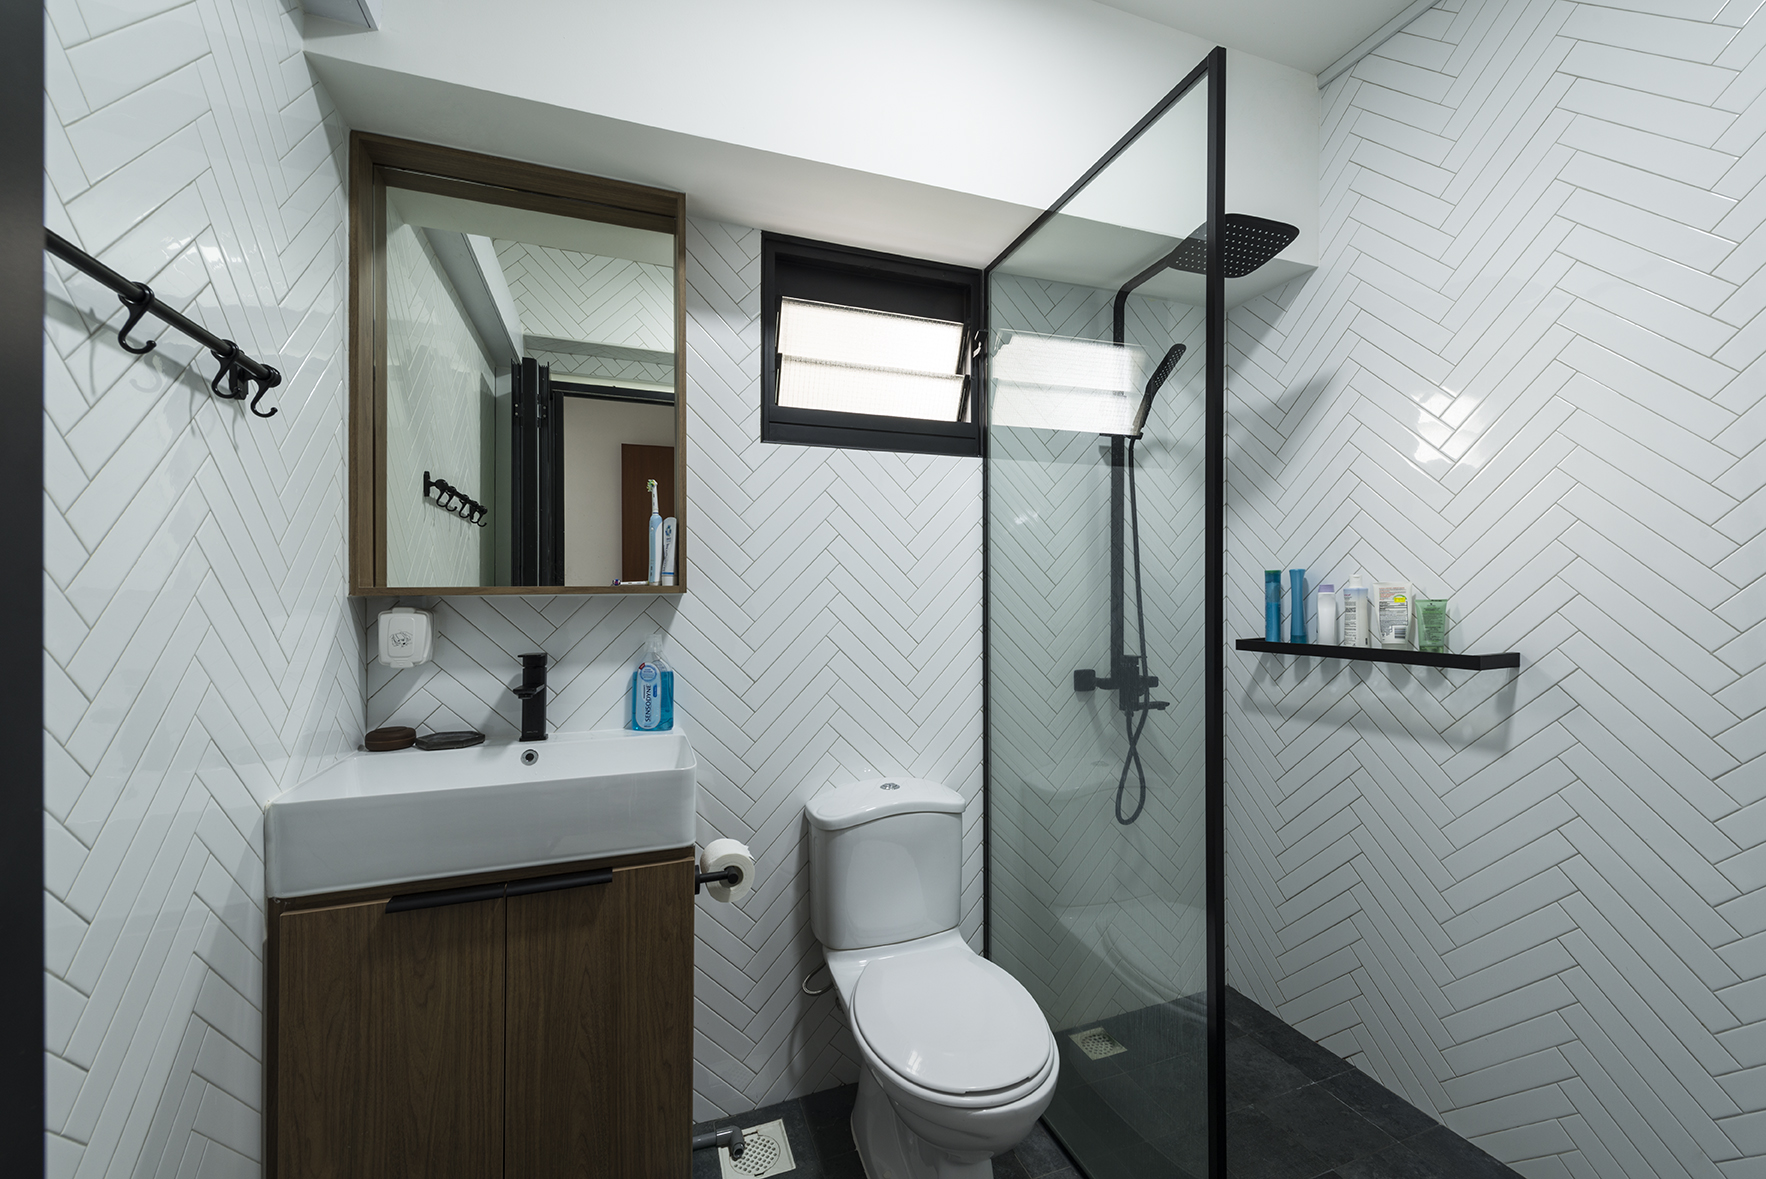 Country, Minimalist, Rustic Design - Bathroom - HDB 5 Room - Design by TBG Interior Design